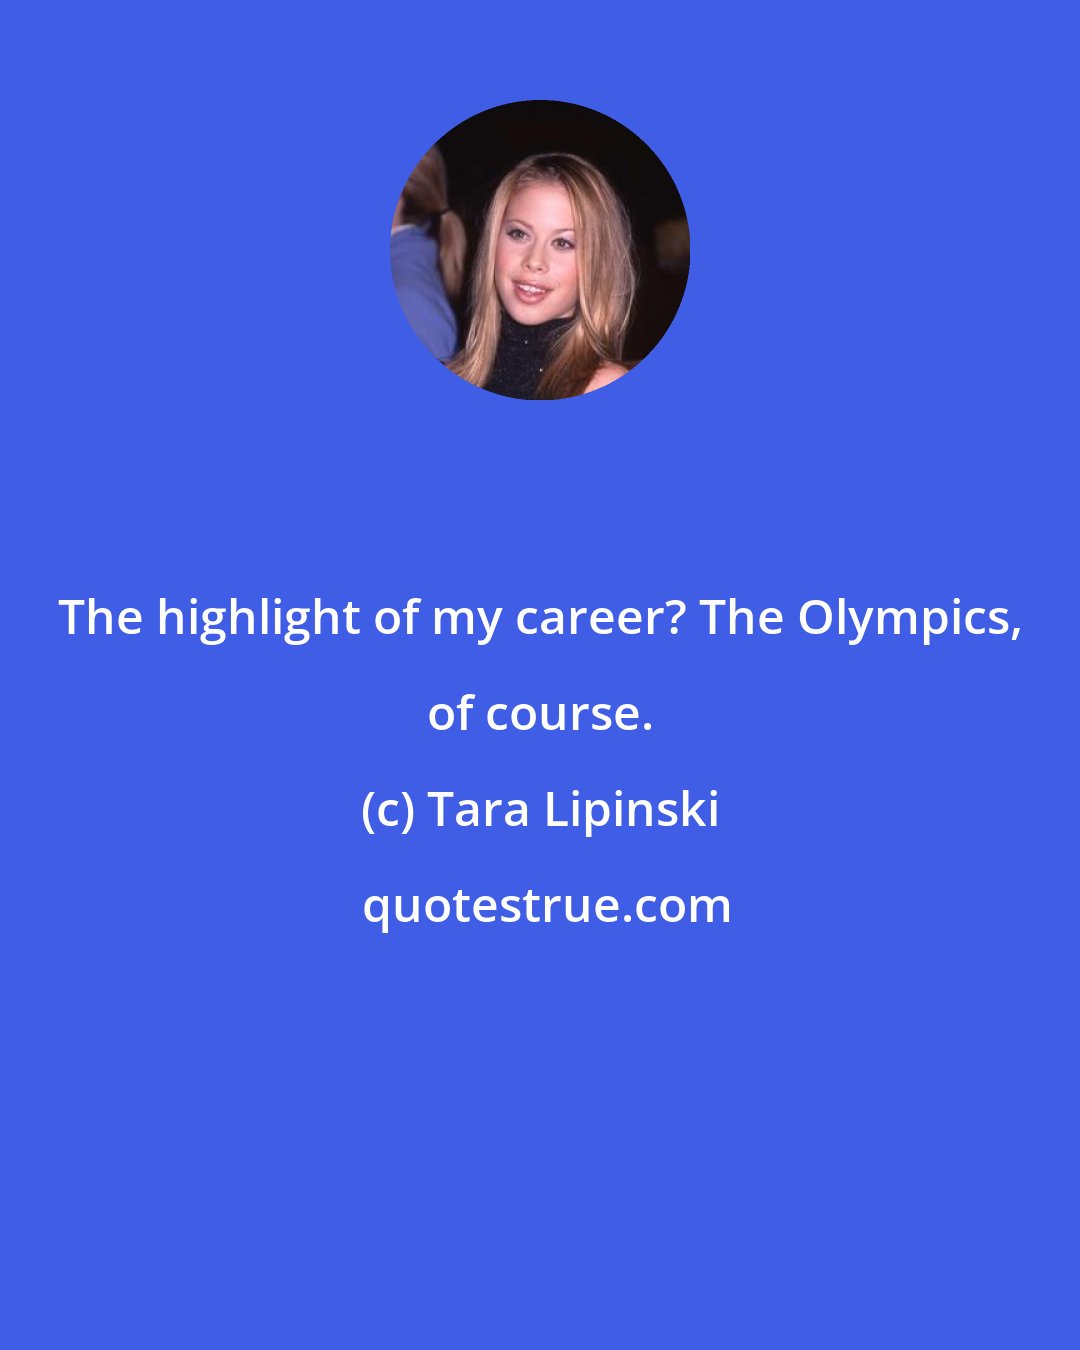 Tara Lipinski: The highlight of my career? The Olympics, of course.